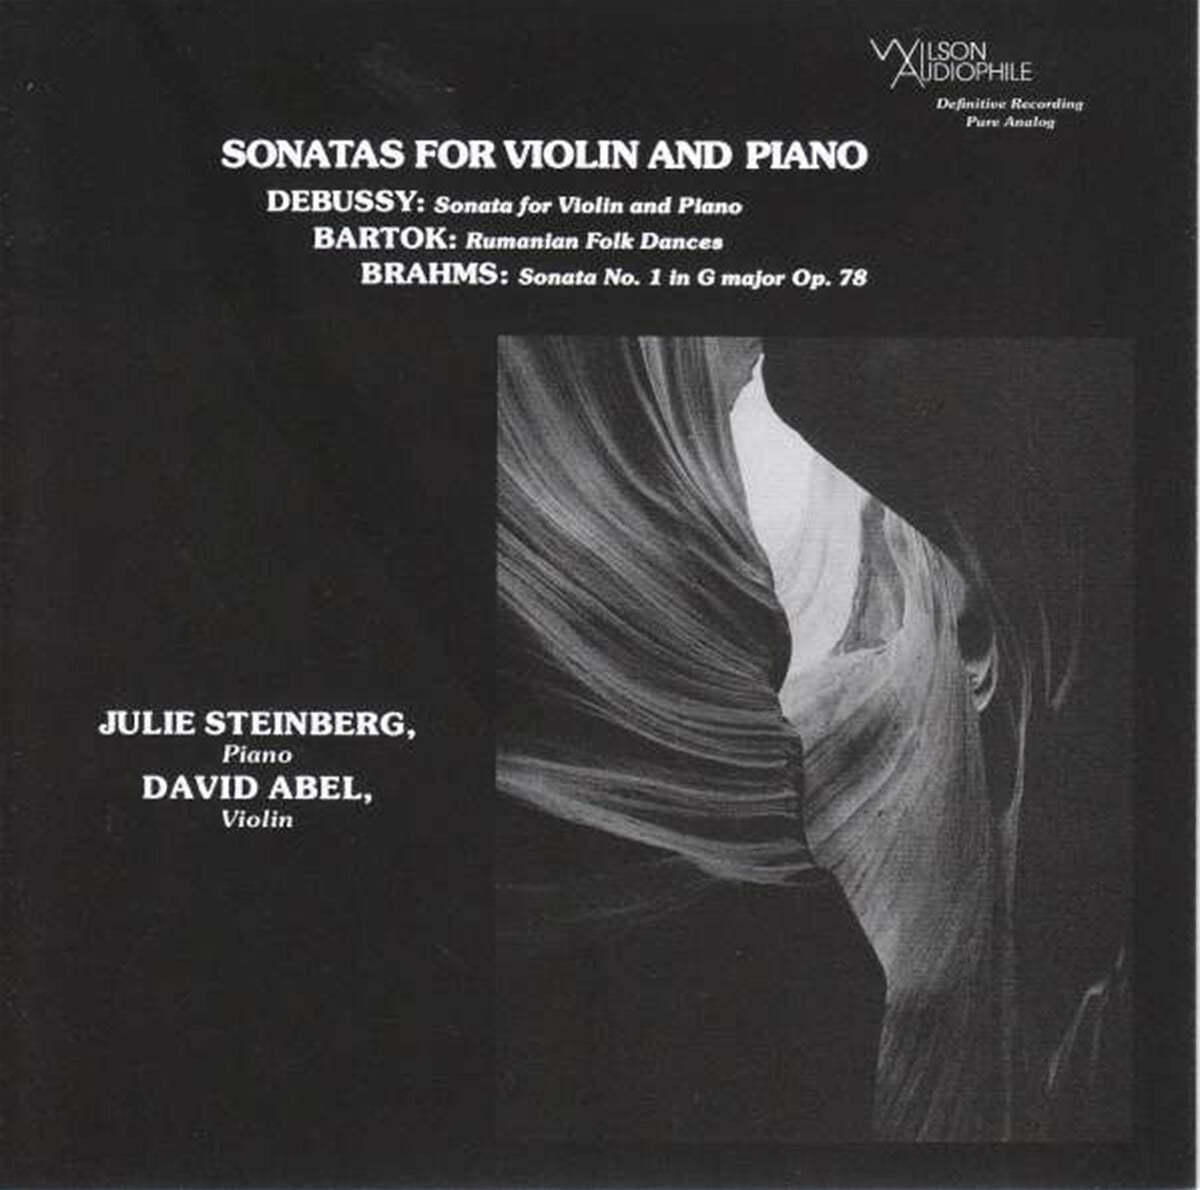 David Abel / Julie Steinberg 브람스 / 드뷔시: 바이올린 소나타 (Brahms: Violin Sonata Op.78 / Debussy: Violin Sonata) 